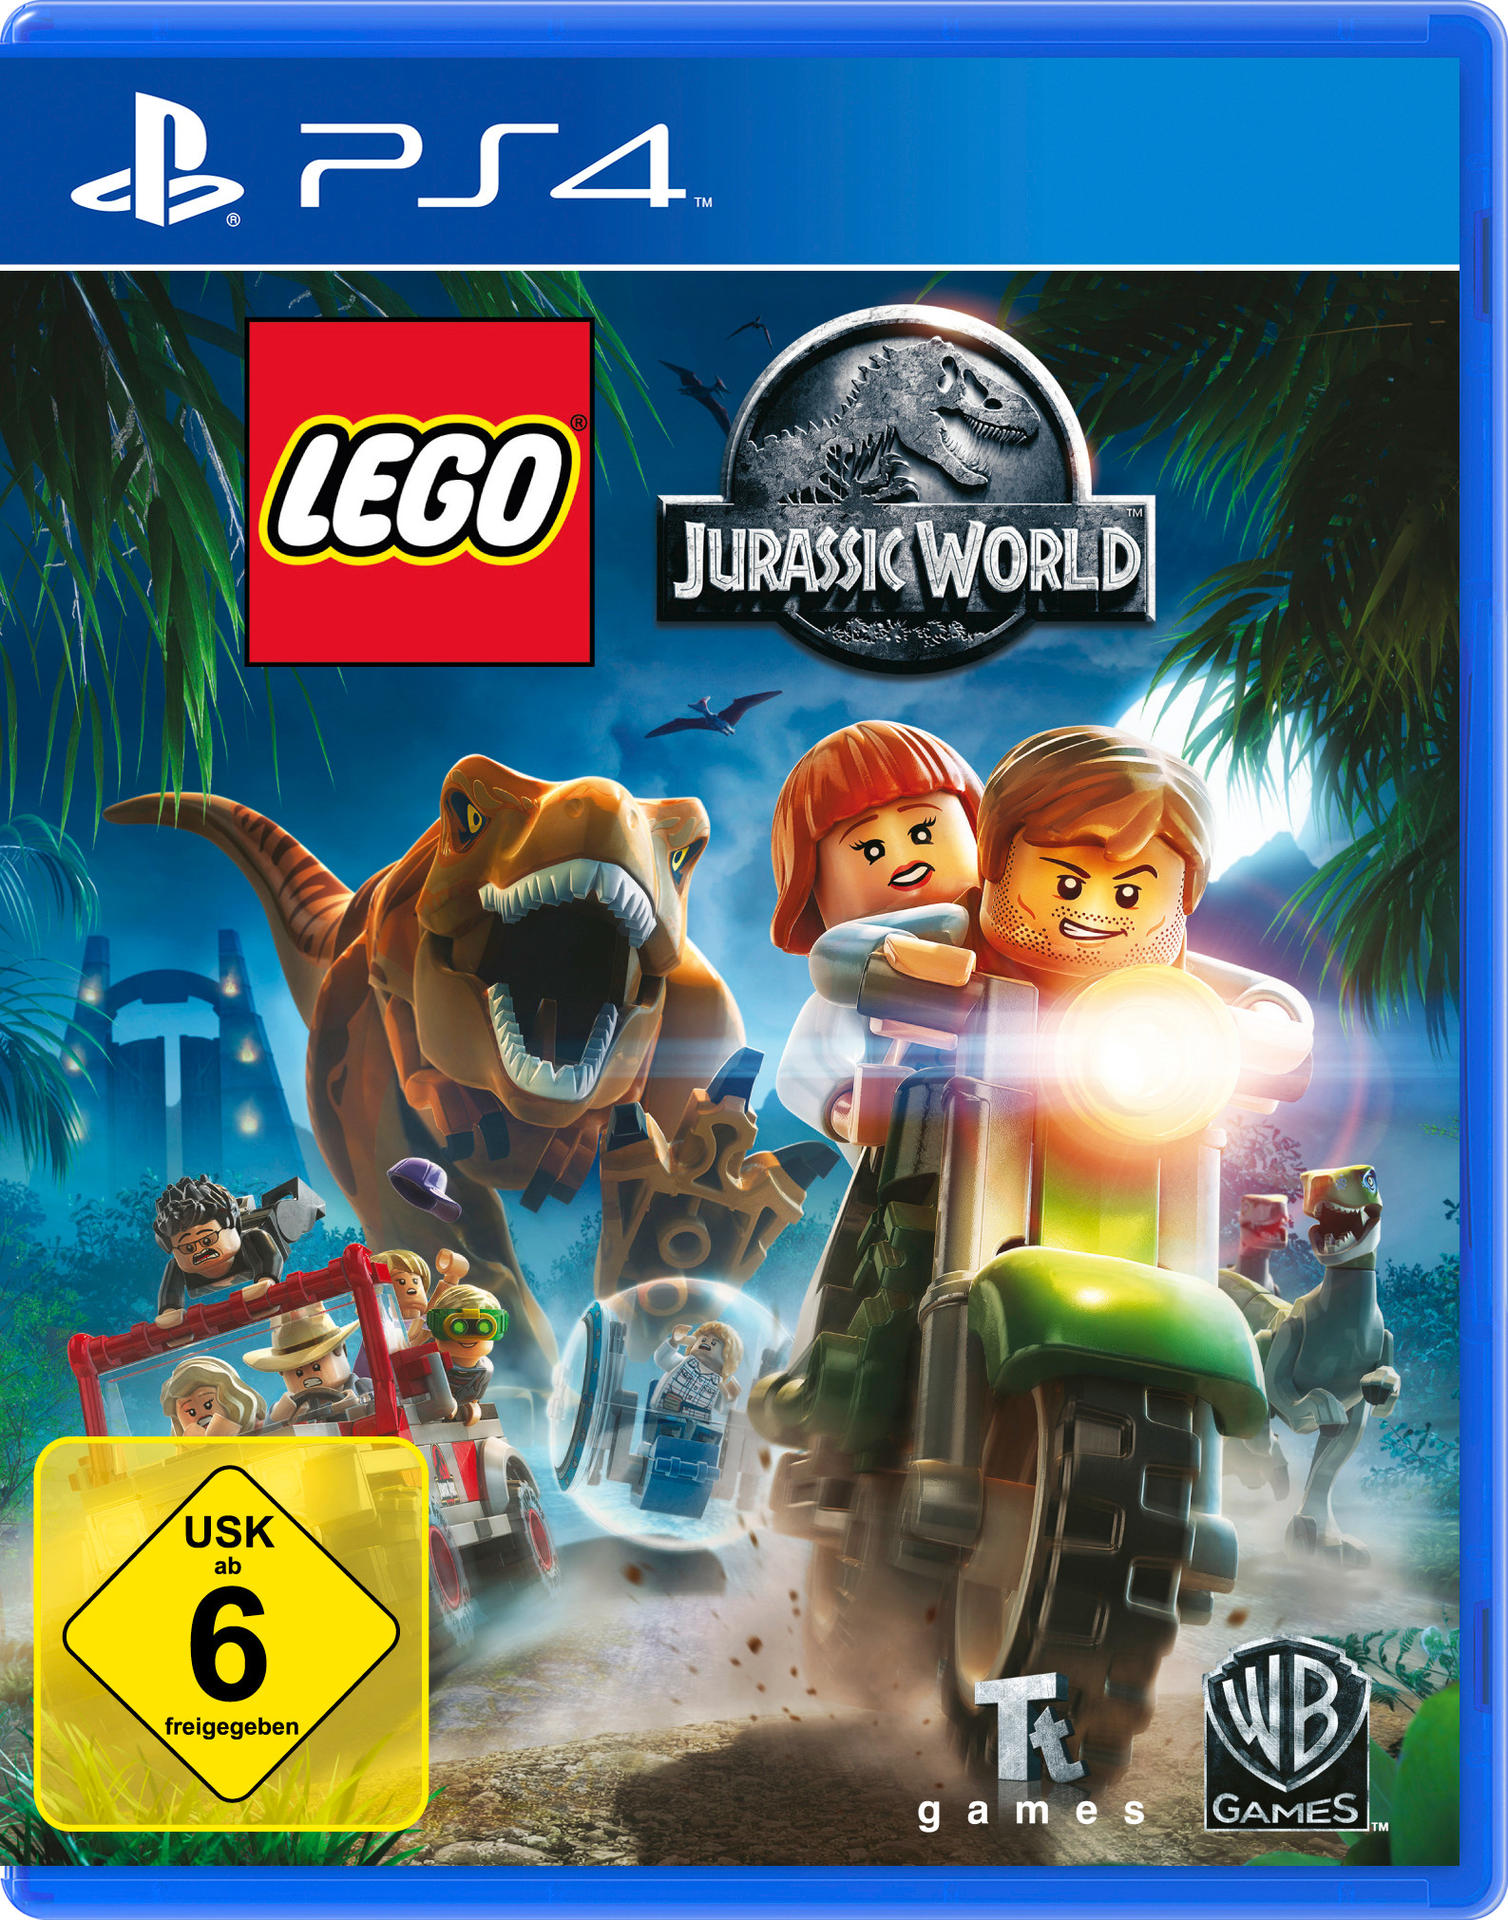 PS4 LEGO JURASSIC WORLD [PlayStation 4] 